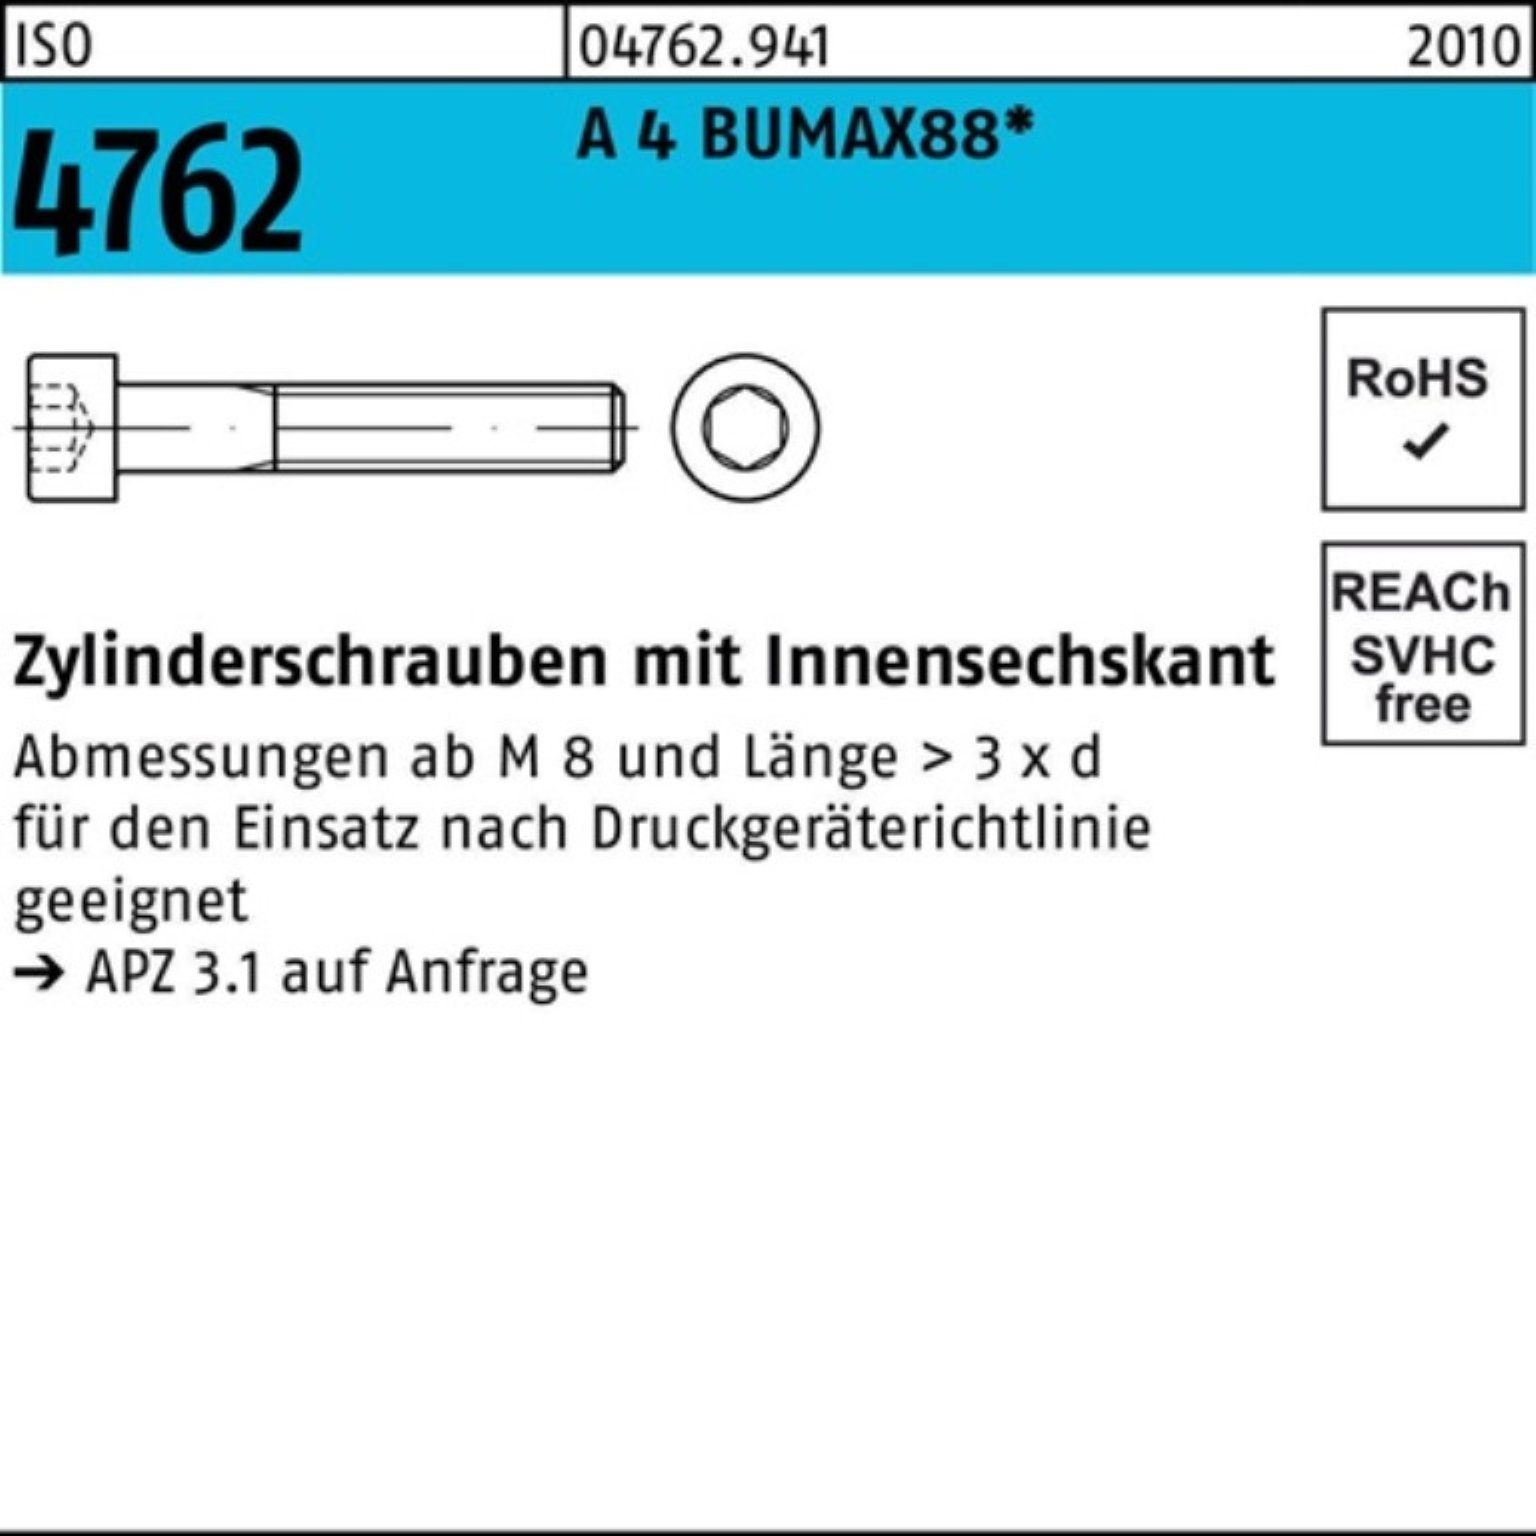 BUMAX88 4762 4 A ISO M4x 200er Innen-6kt Zylinderschraube Pack 200 Zylinderschraube 25 Bufab